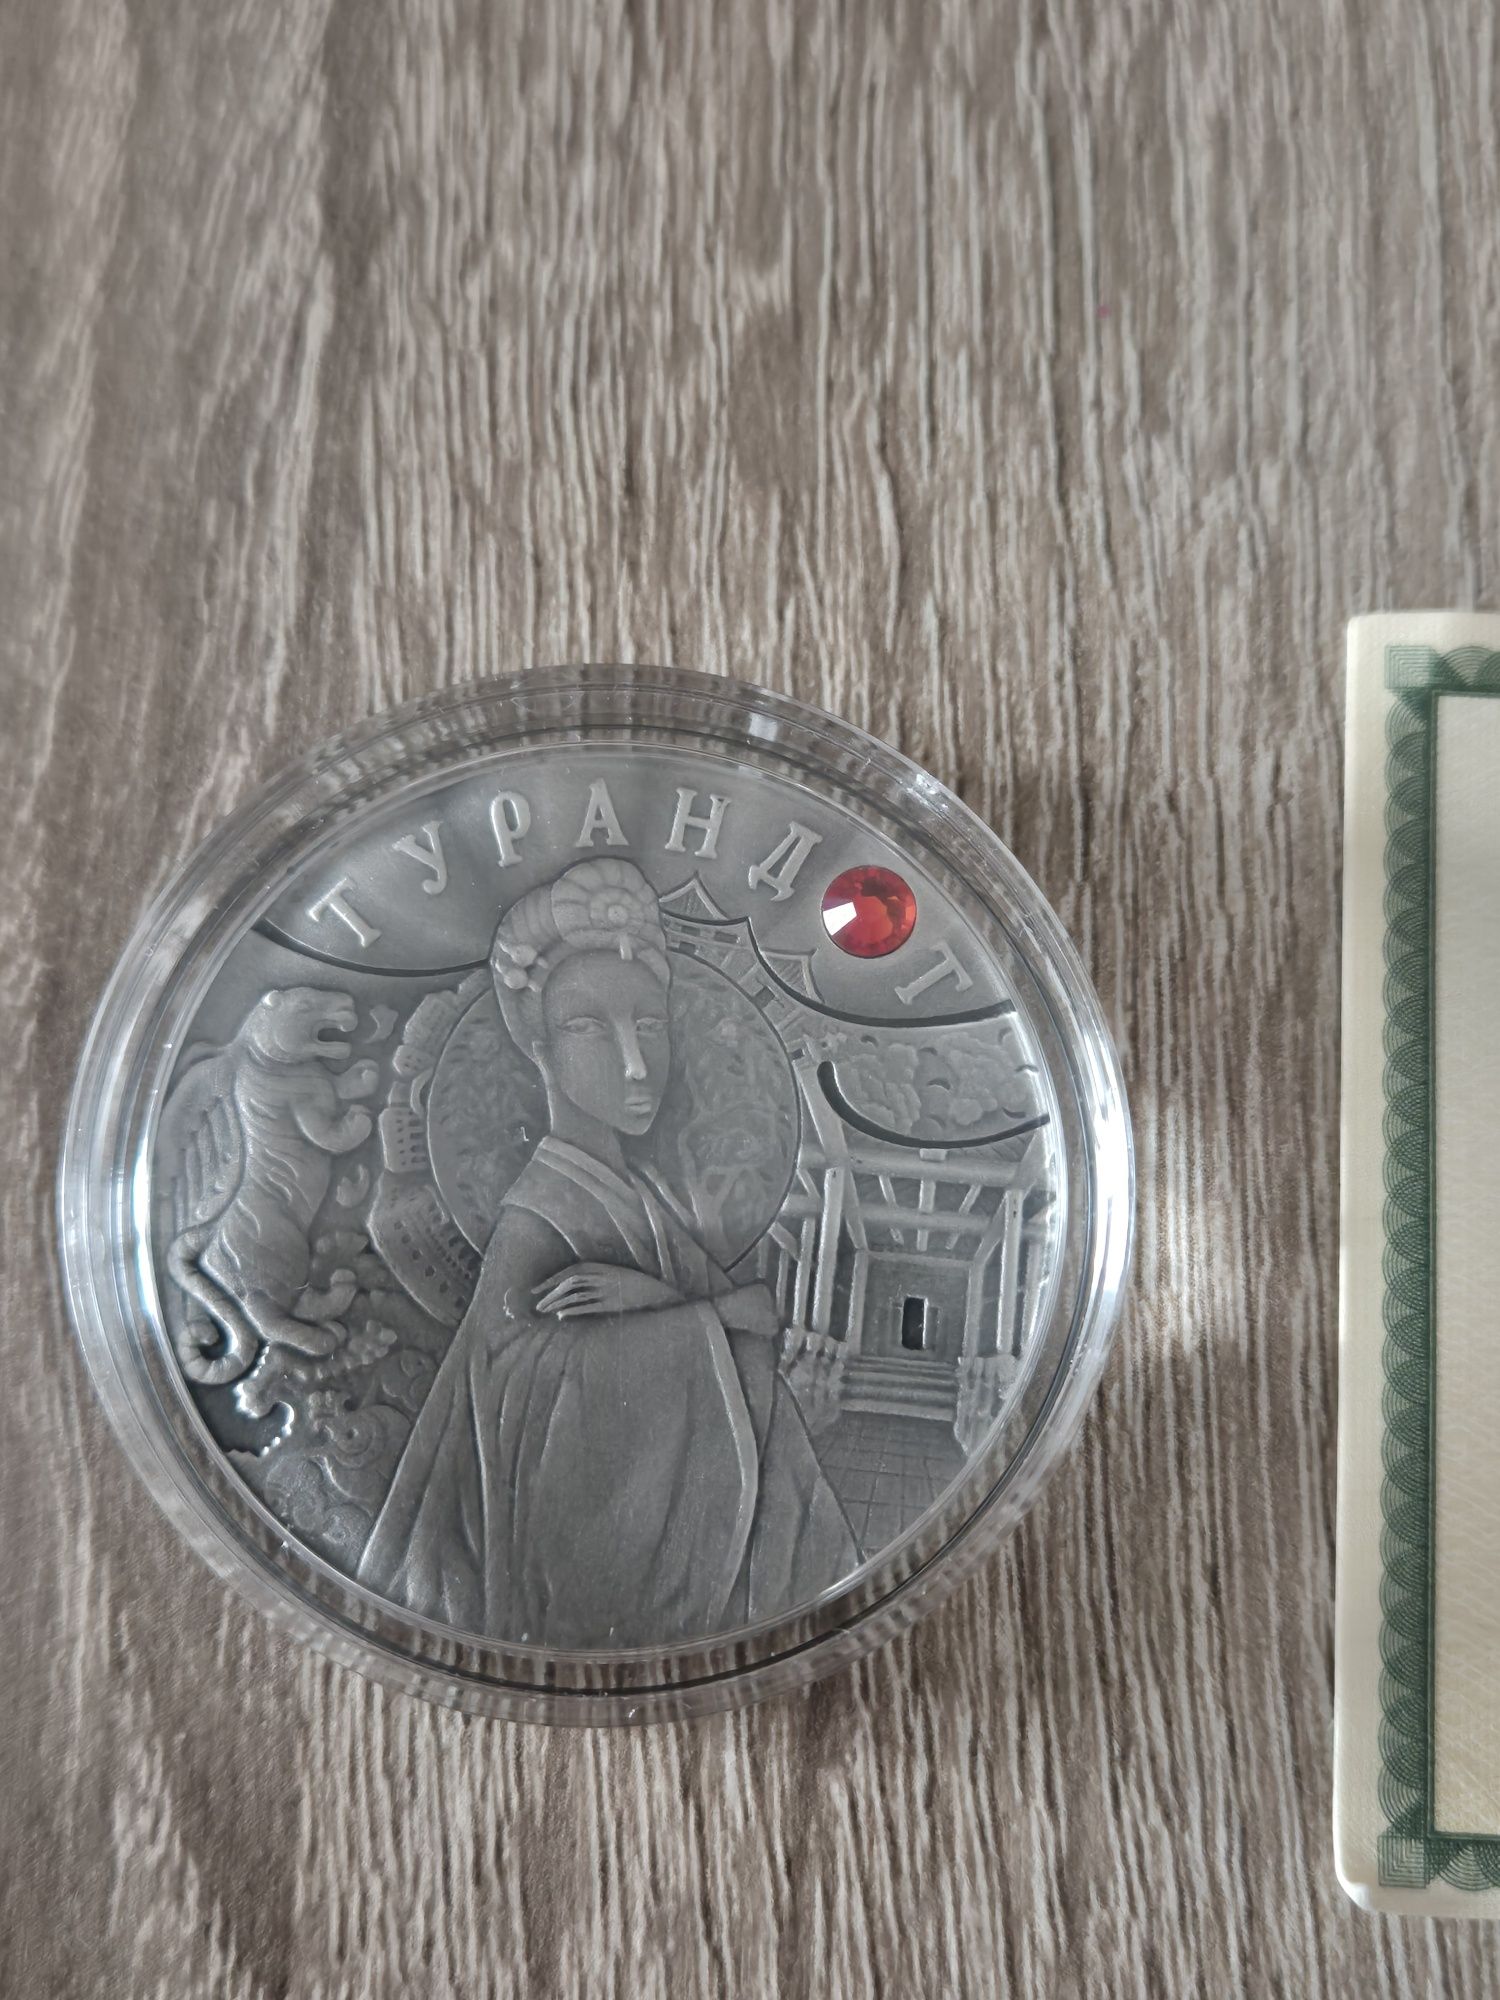 20 rubli księżniczka turandot Białoruś 2008 srebrna moneta bajki